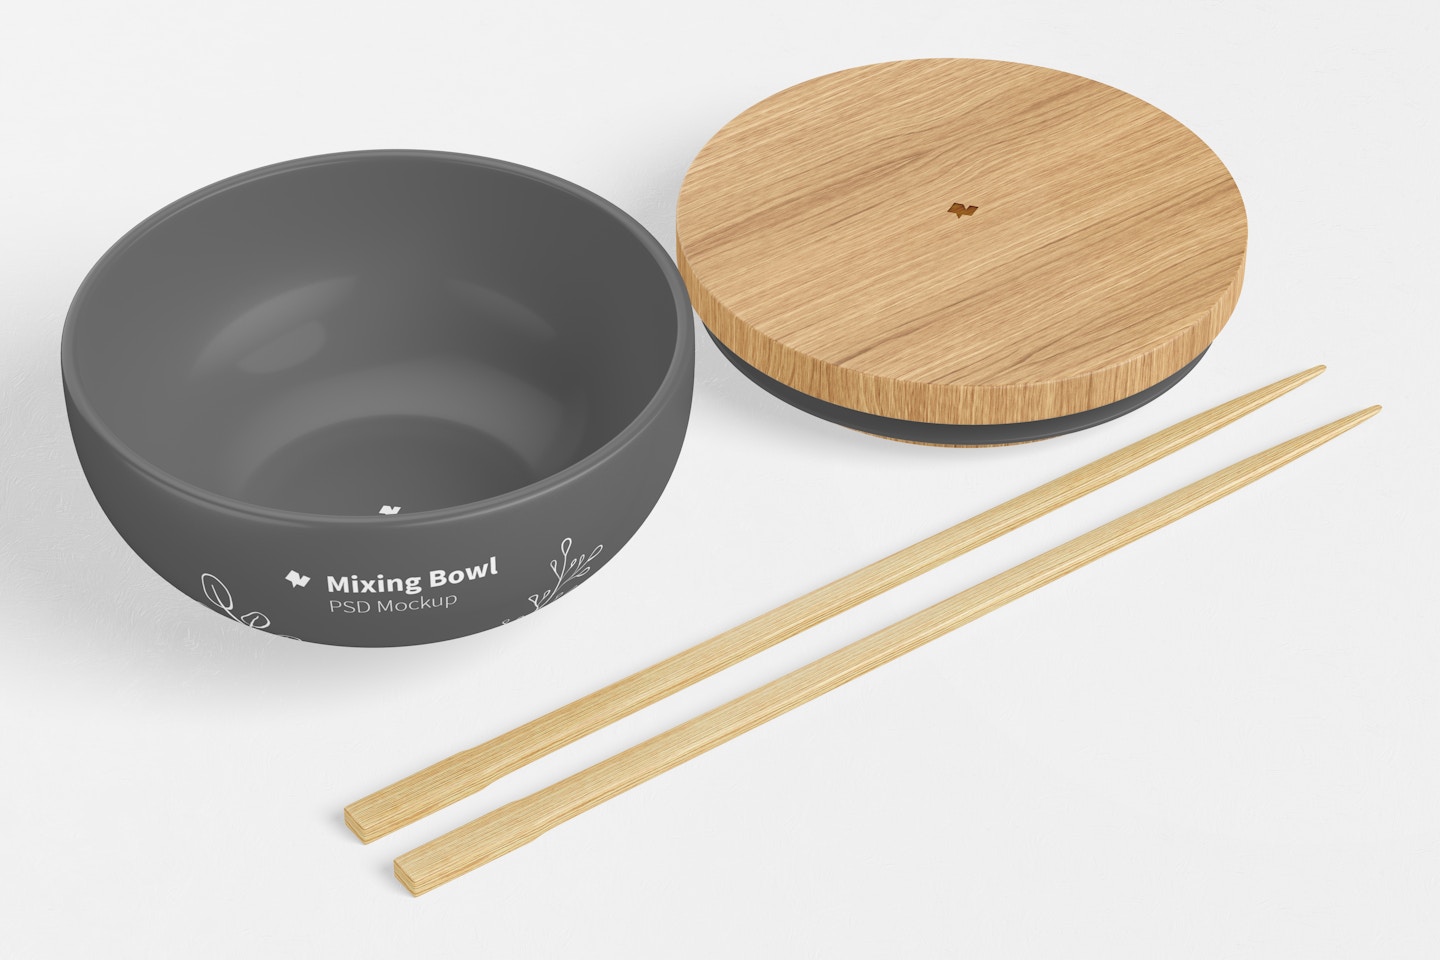 Ceramic Mixing Bowl with Chopsticks Mockup